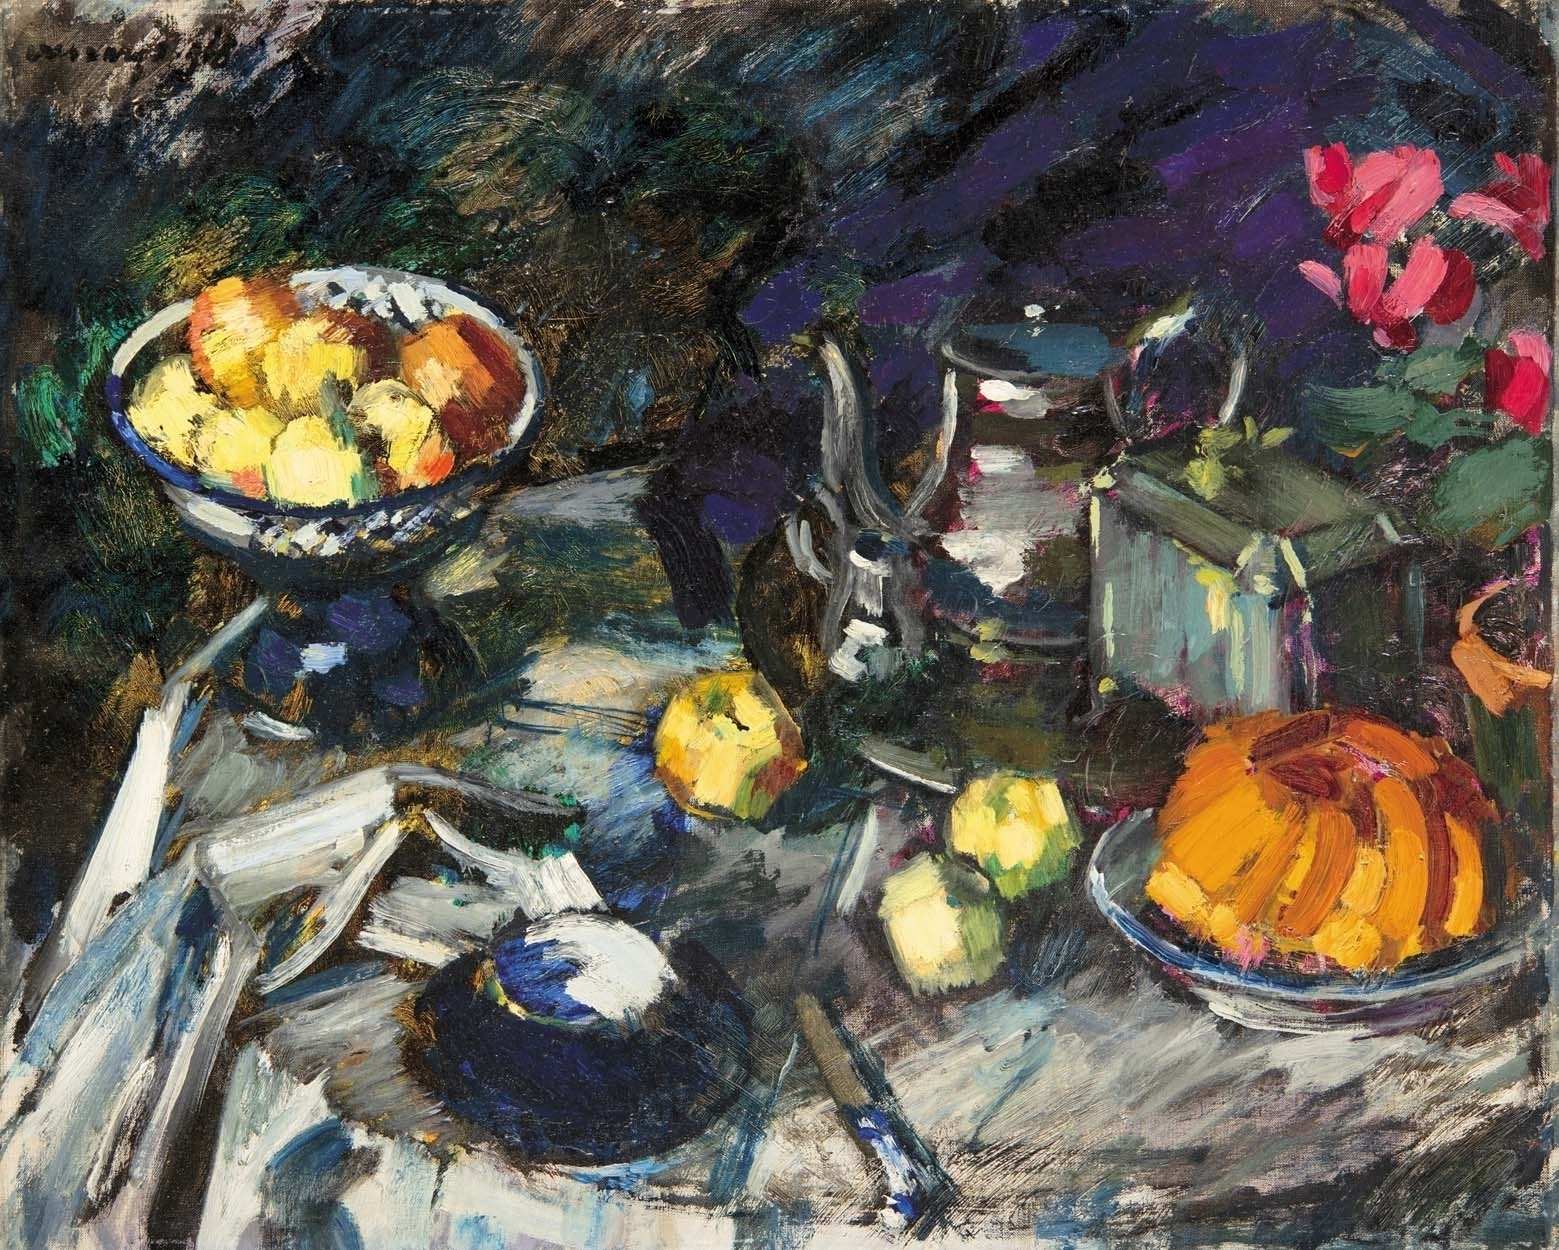 Vaszary János (1867-1939) Breakfast Table, 1918